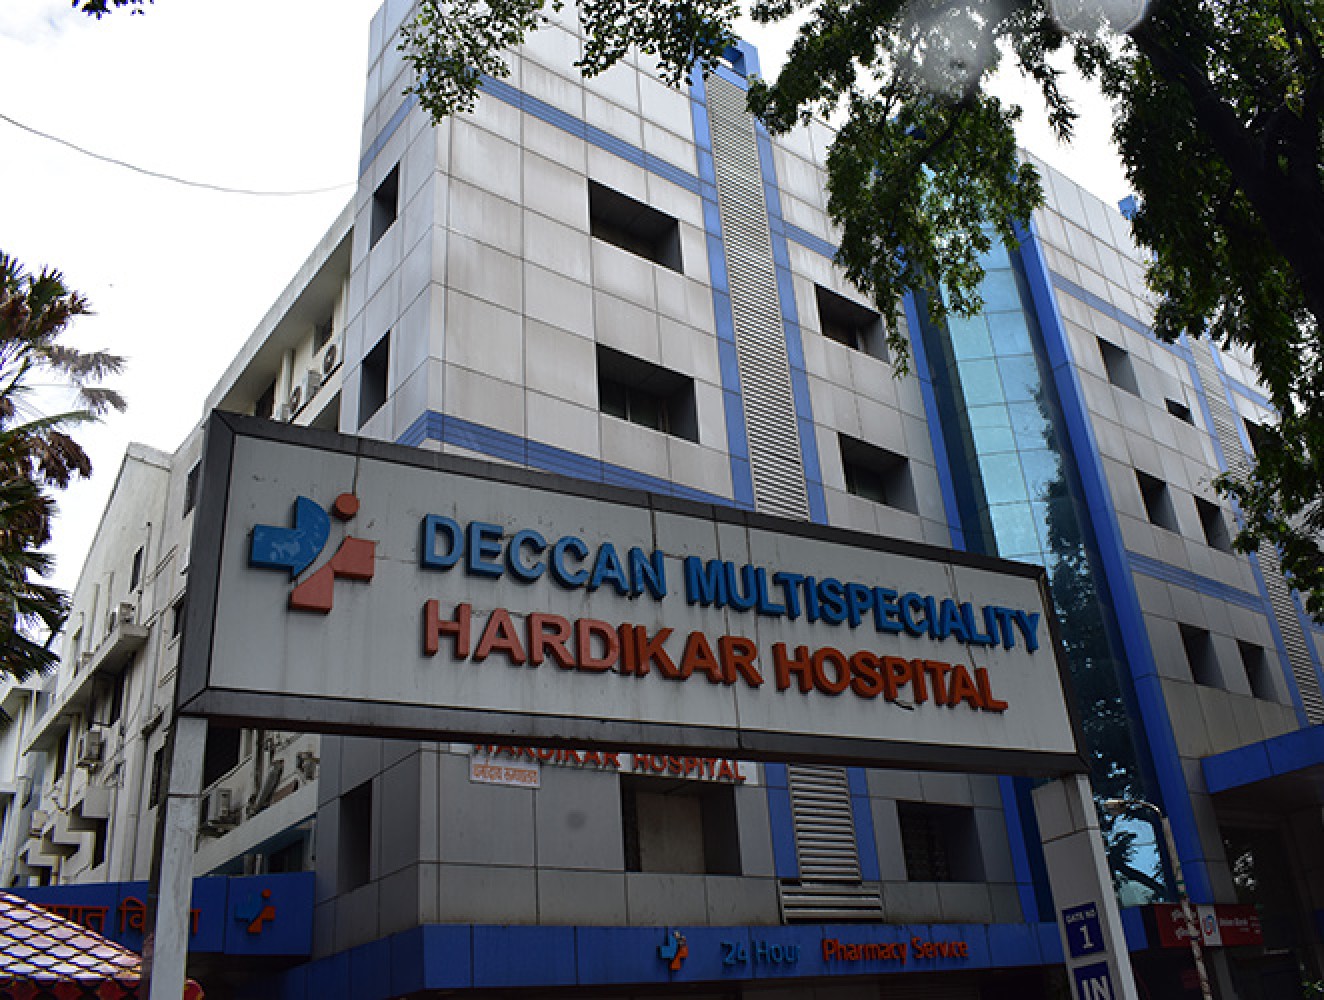 Deccan Hardikar Hospital (Sushrut Medical Care And Research Society) photo